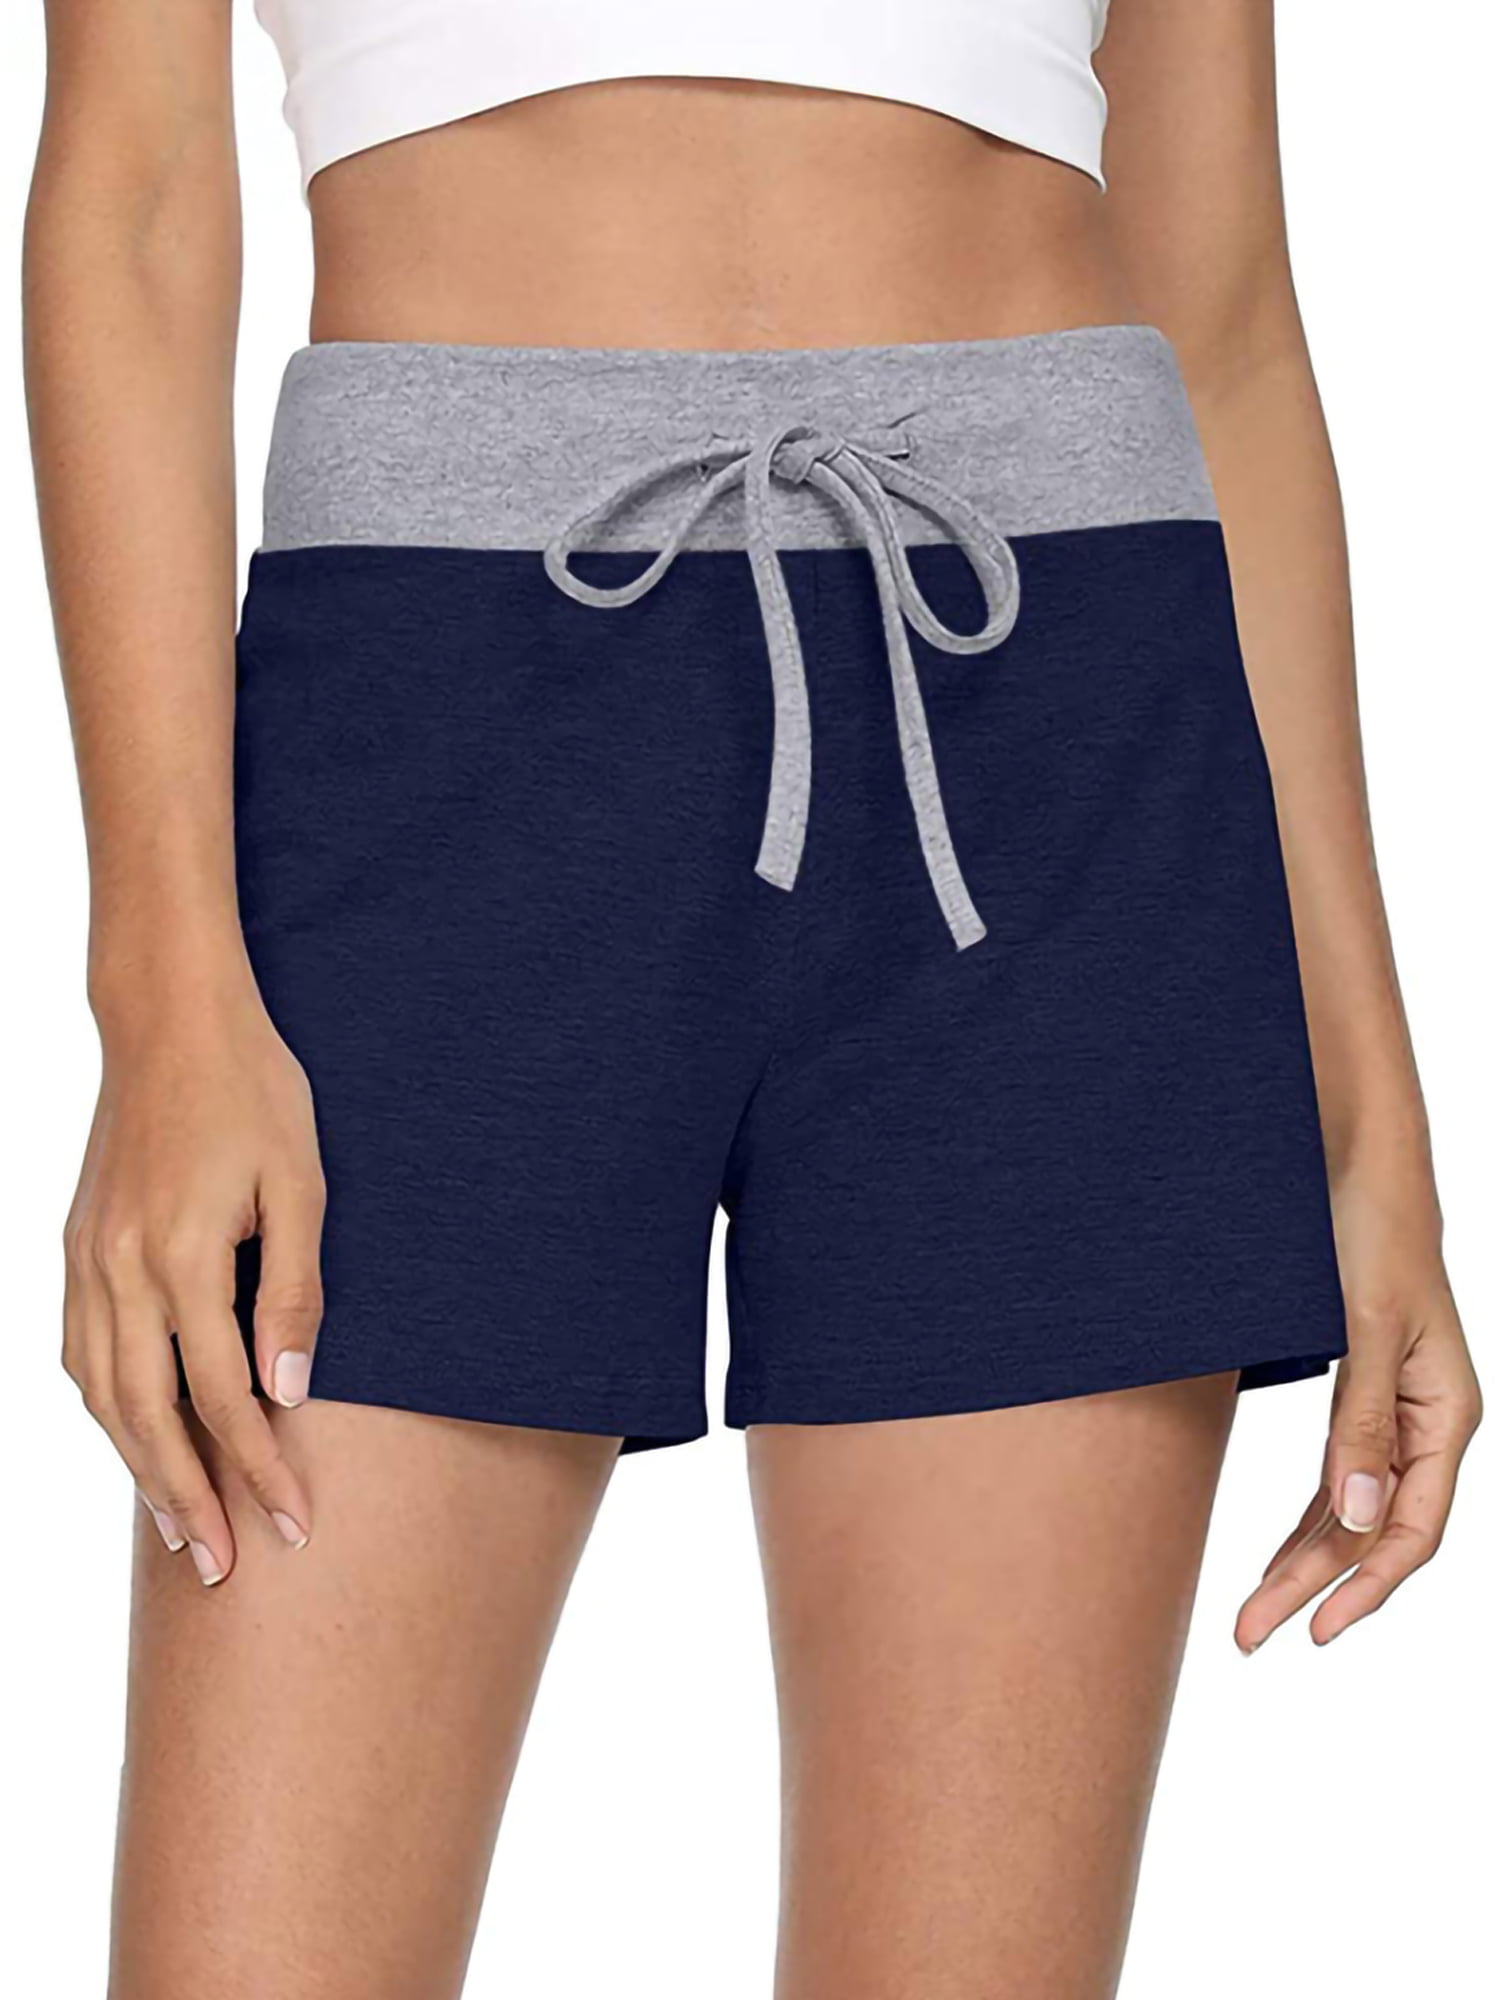 IDGREATIM Girls Shorts Hot Pants Running Short Quick Dry Beach Board Swimwear Bathing Suit Casual Sport Summer Shorts with Drawstring 4-9 Years